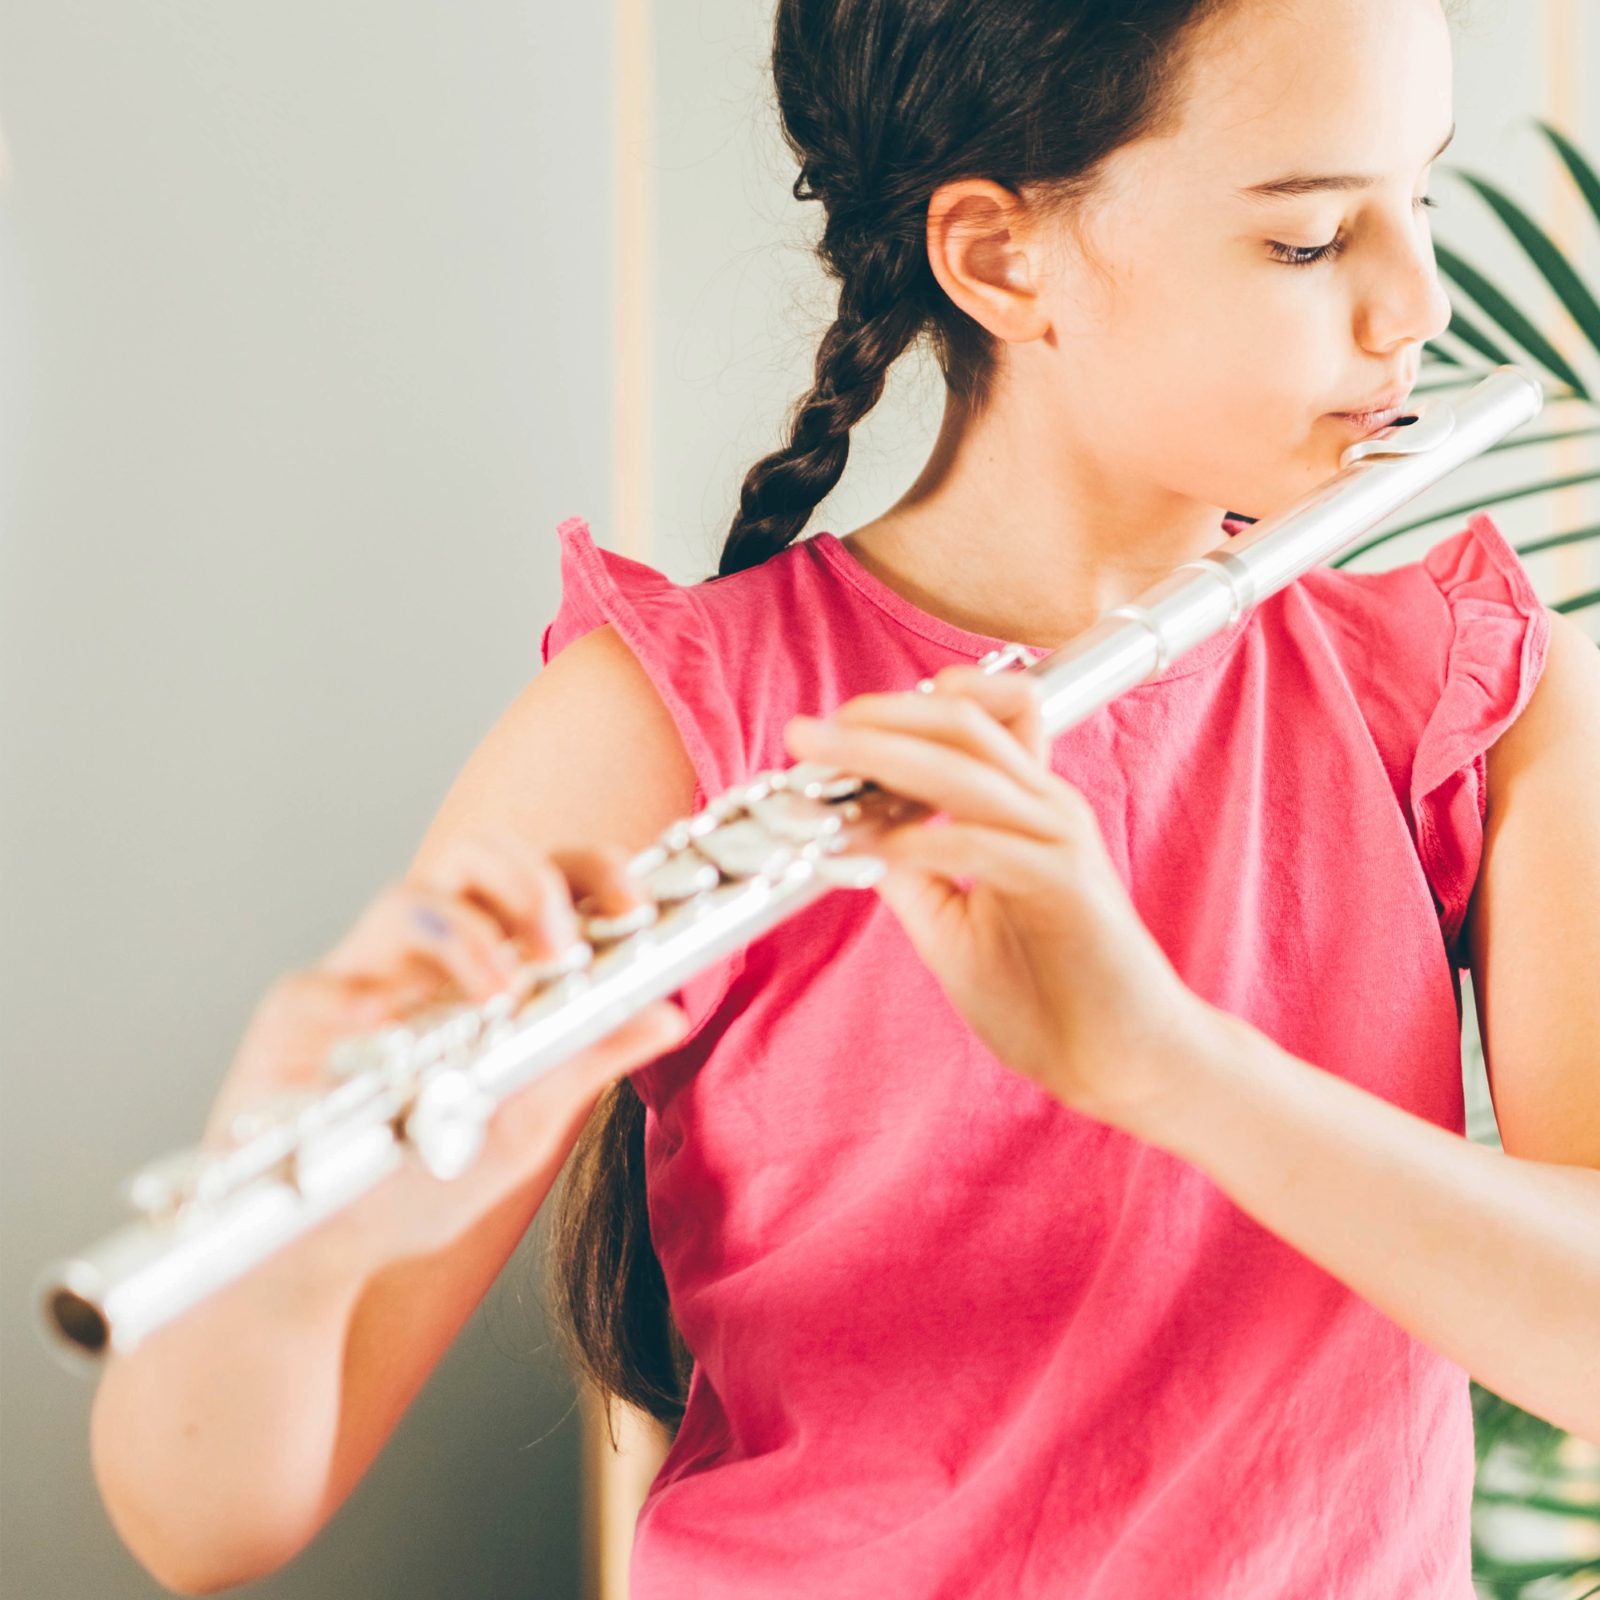 Adult flute lesson 50 minutes : photo 1